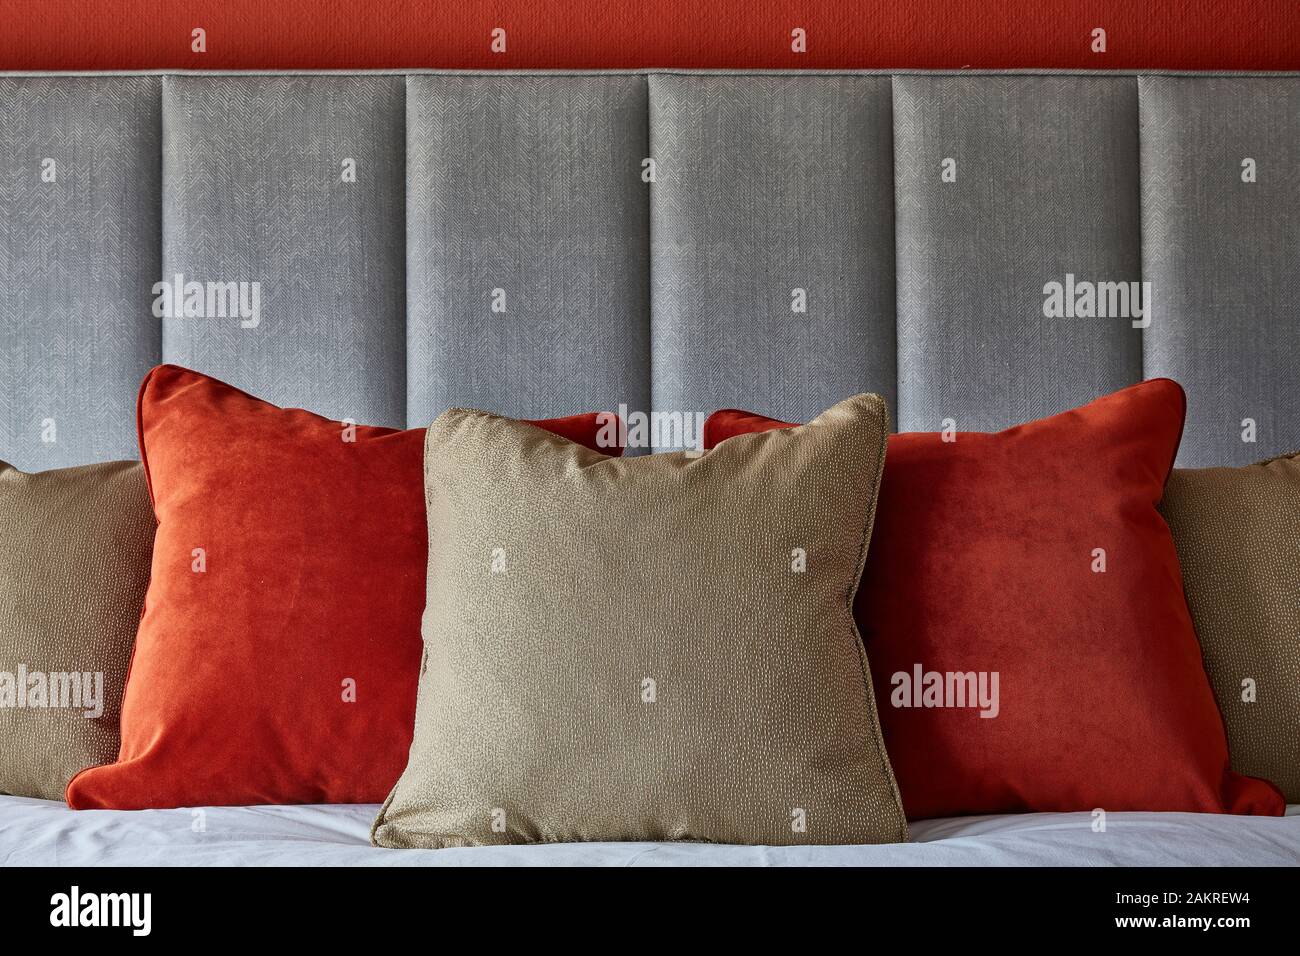 cushions on grey headboard Stock Photo